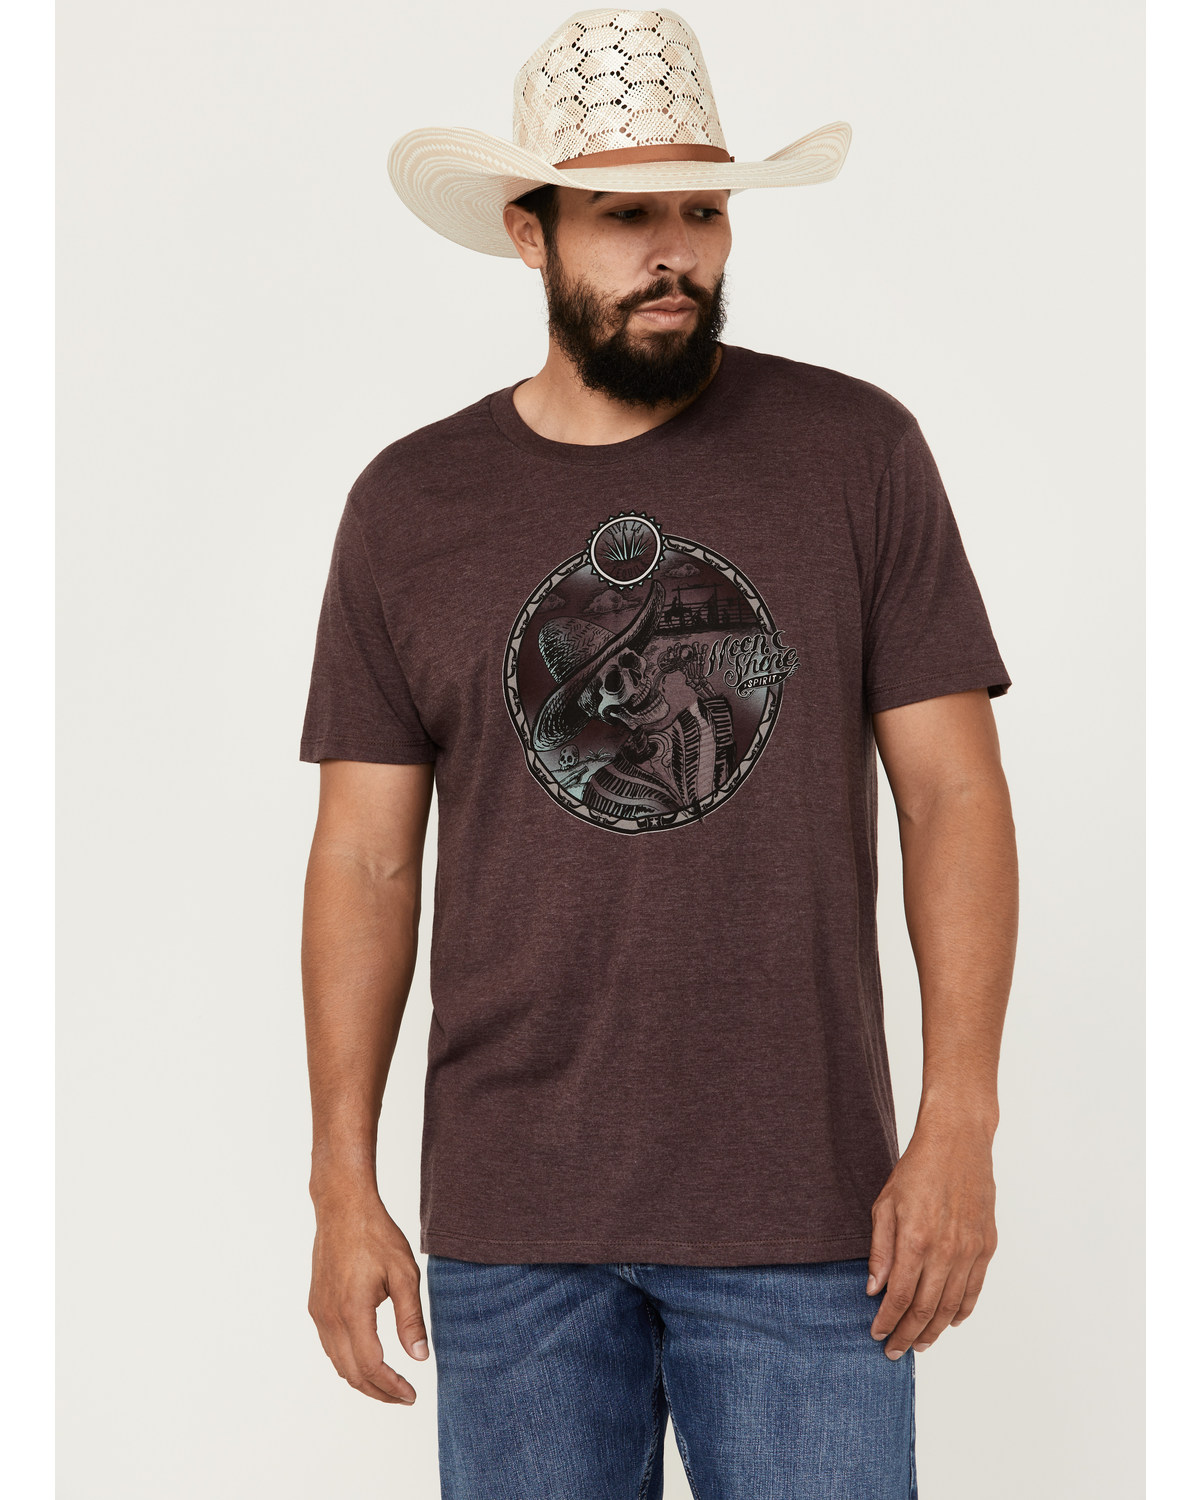 Moonshine Spirit Men's Viva La Tequila Short Sleeve Graphic T-Shirt